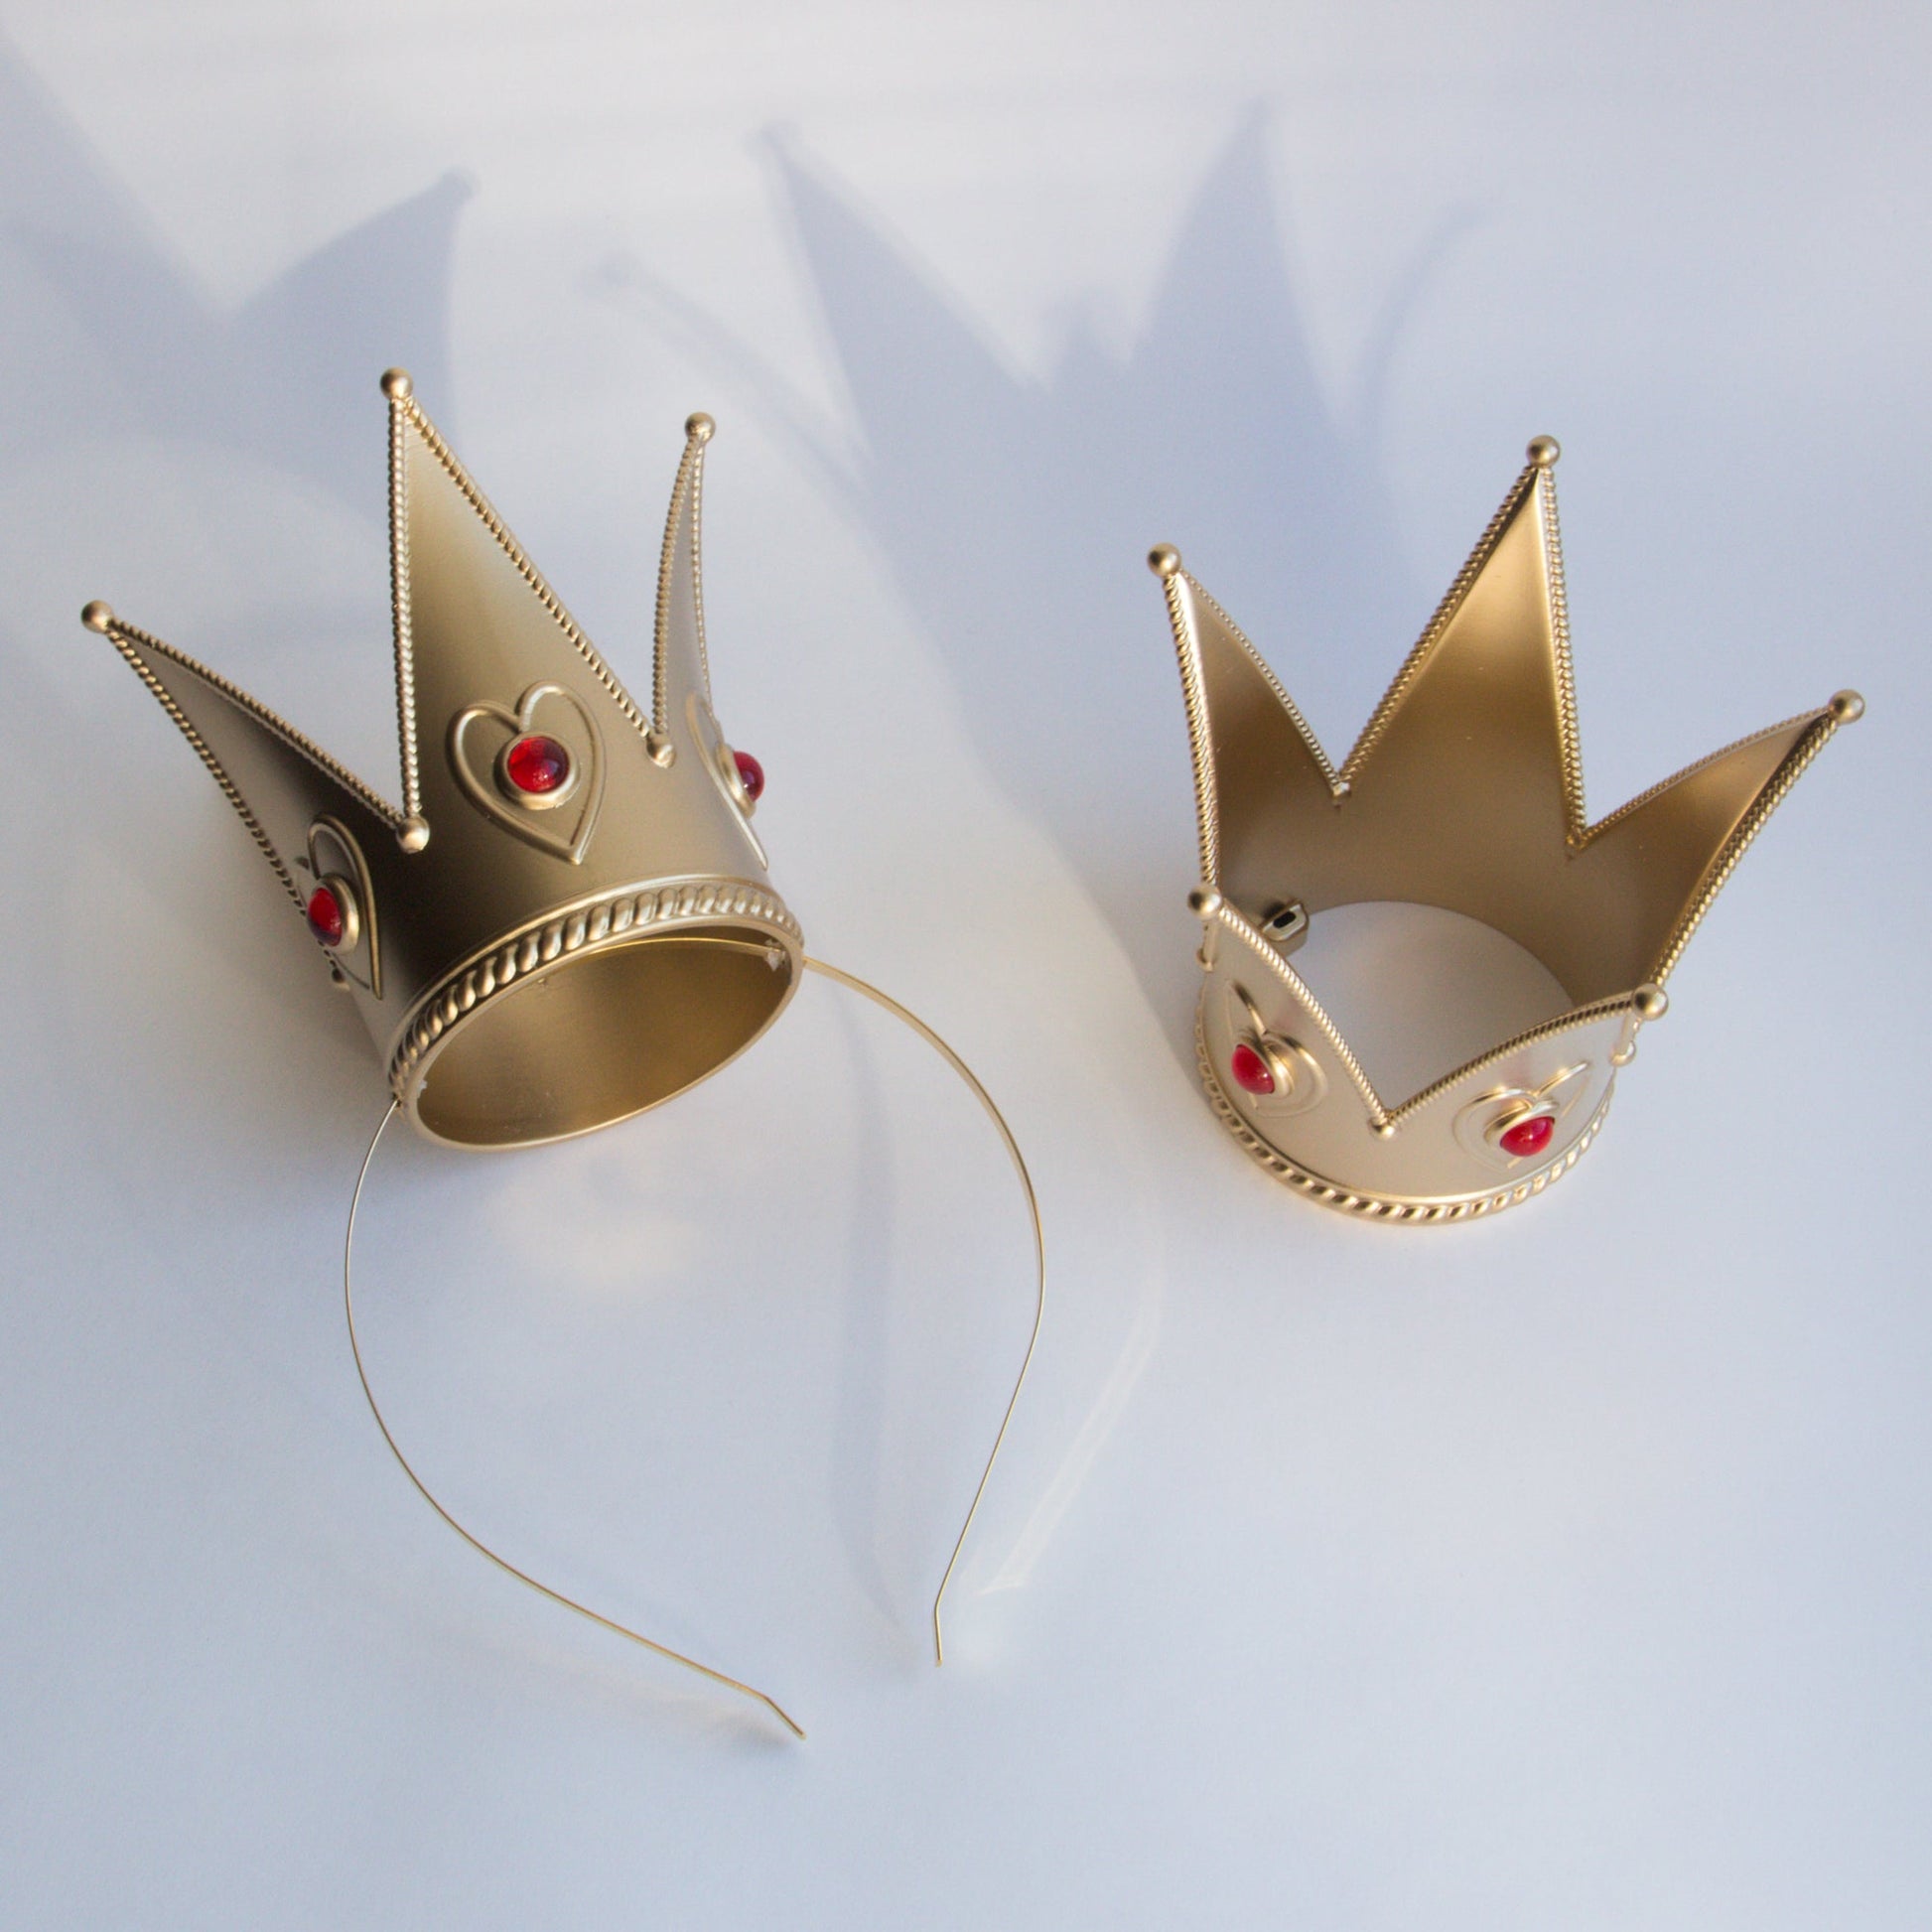 3D Printed Queen Of Hearts (Red Queen) Cosplay Costume accessories